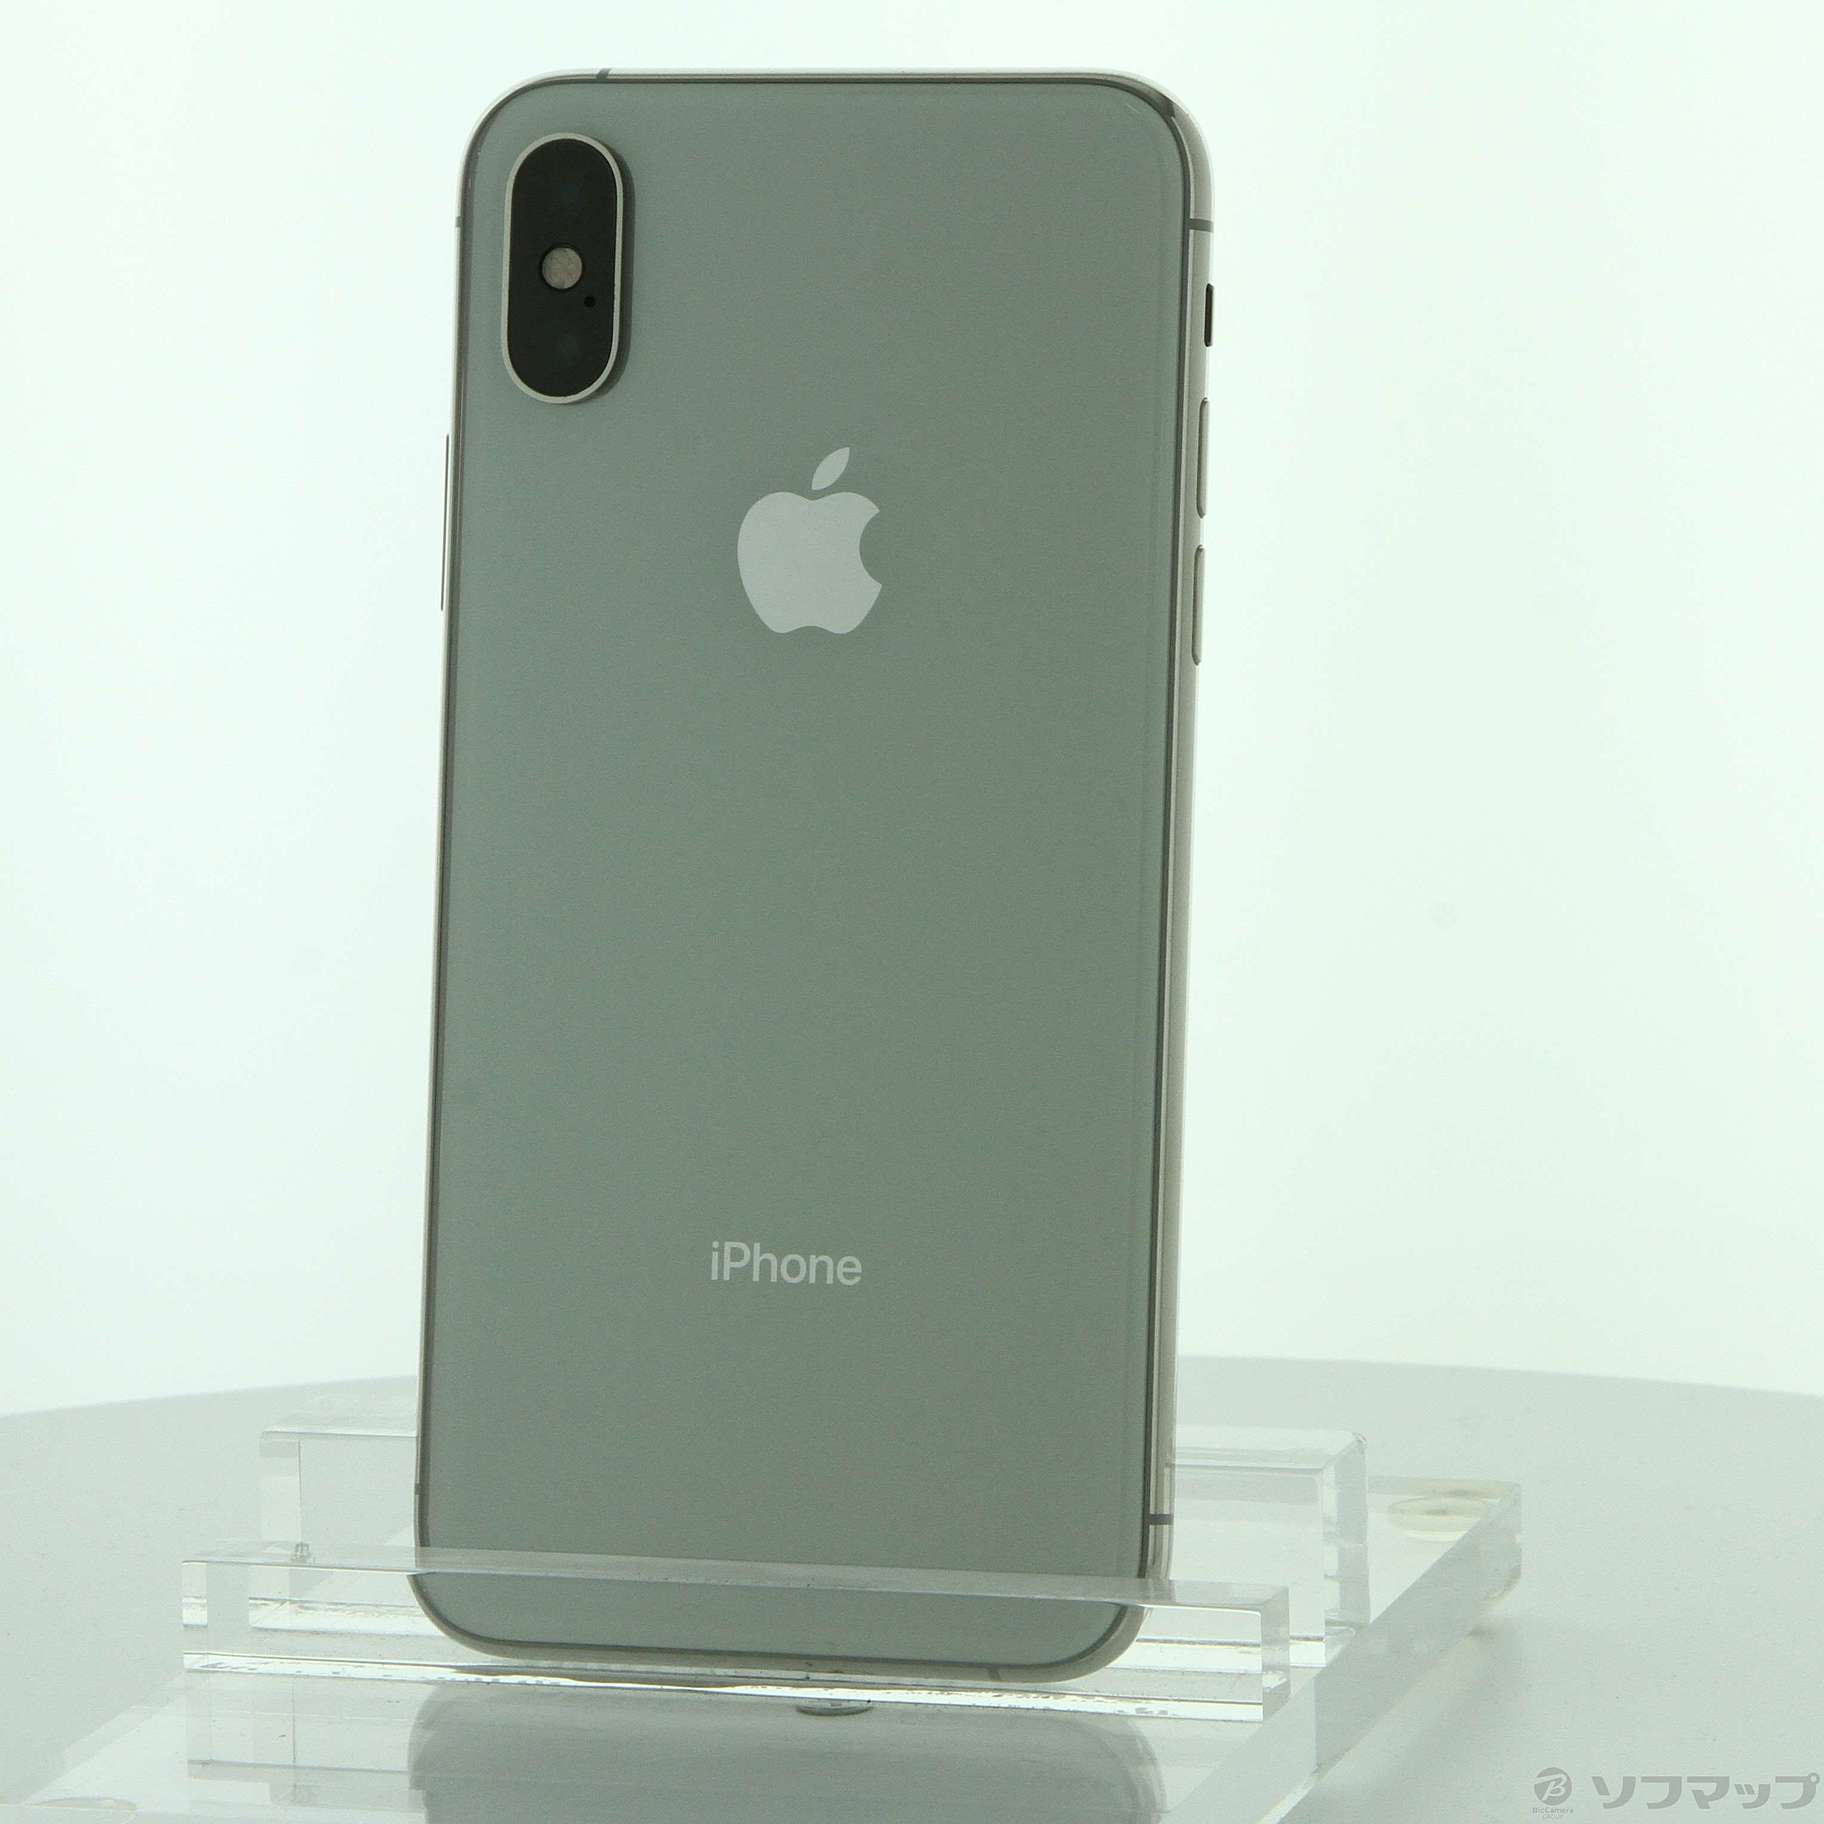 12,900円iPhoneXS 64GB silver